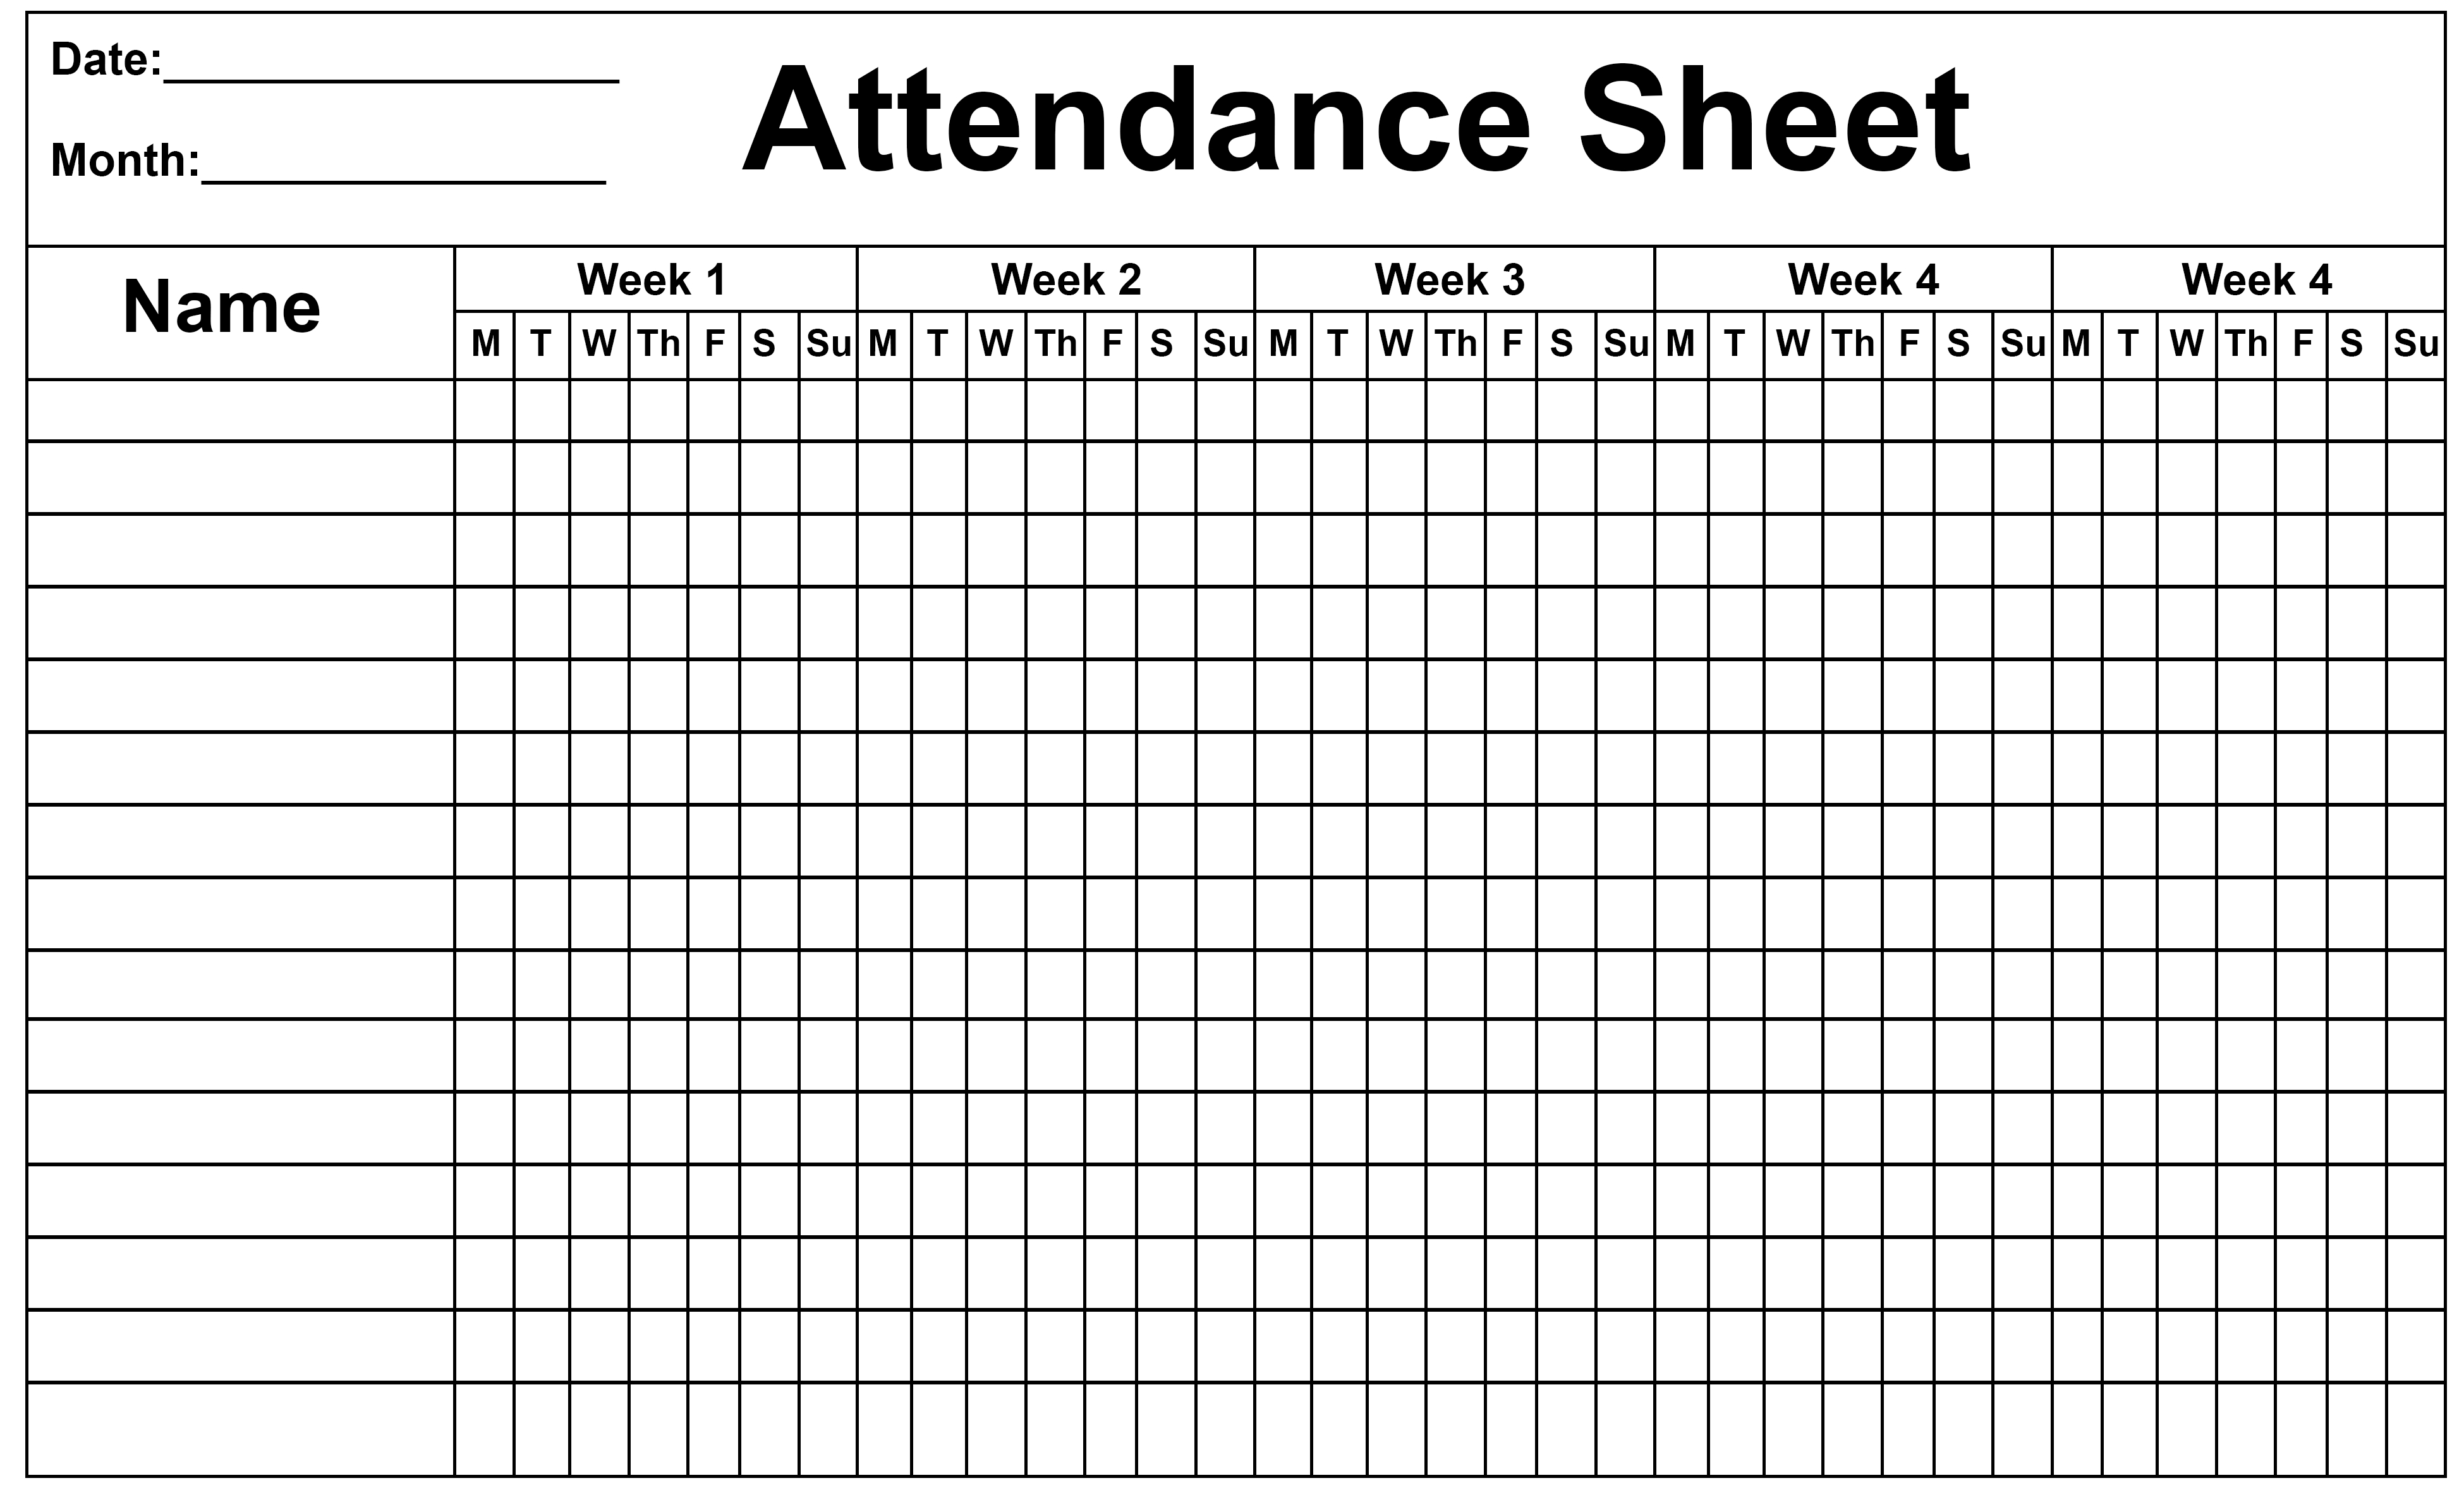 Employee Attendance Tracker Sheet 2019 | Printable Calendar Diy-2020 Employee Attendance Calendar Record Template Free